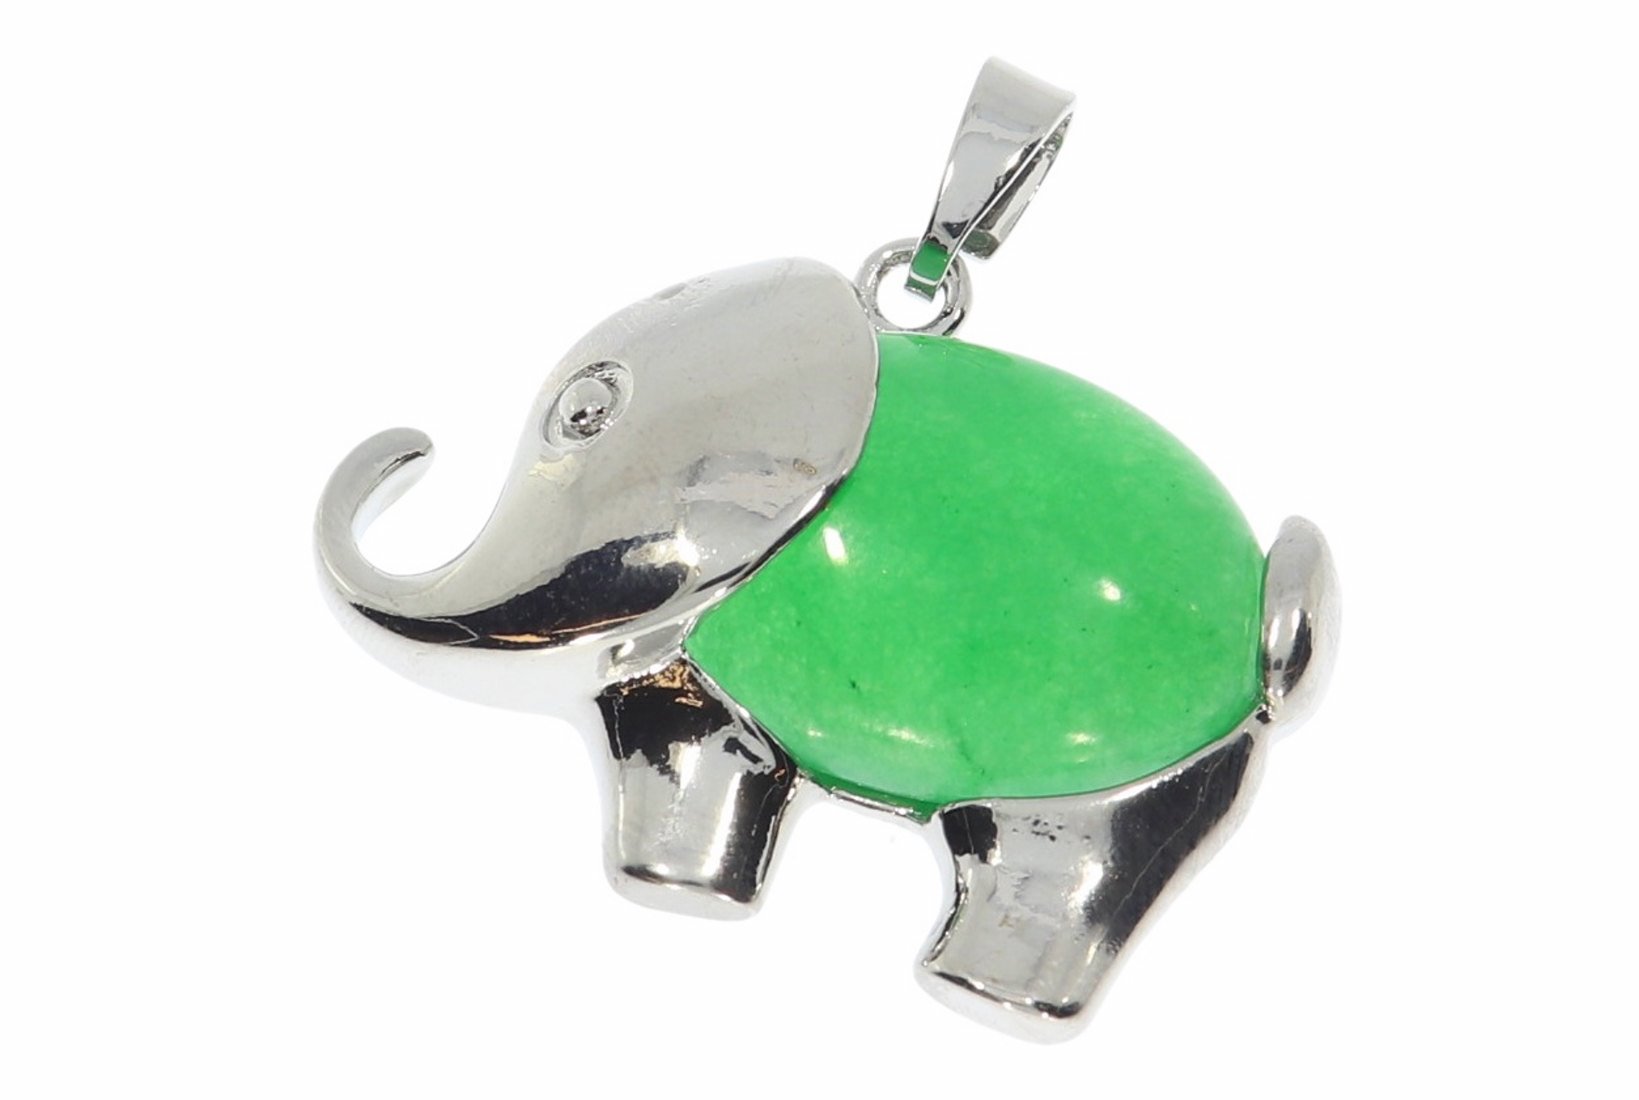 Jade grün Elefant Schmuck Anhänger mit Öse silber farben 38x30mm  HS573